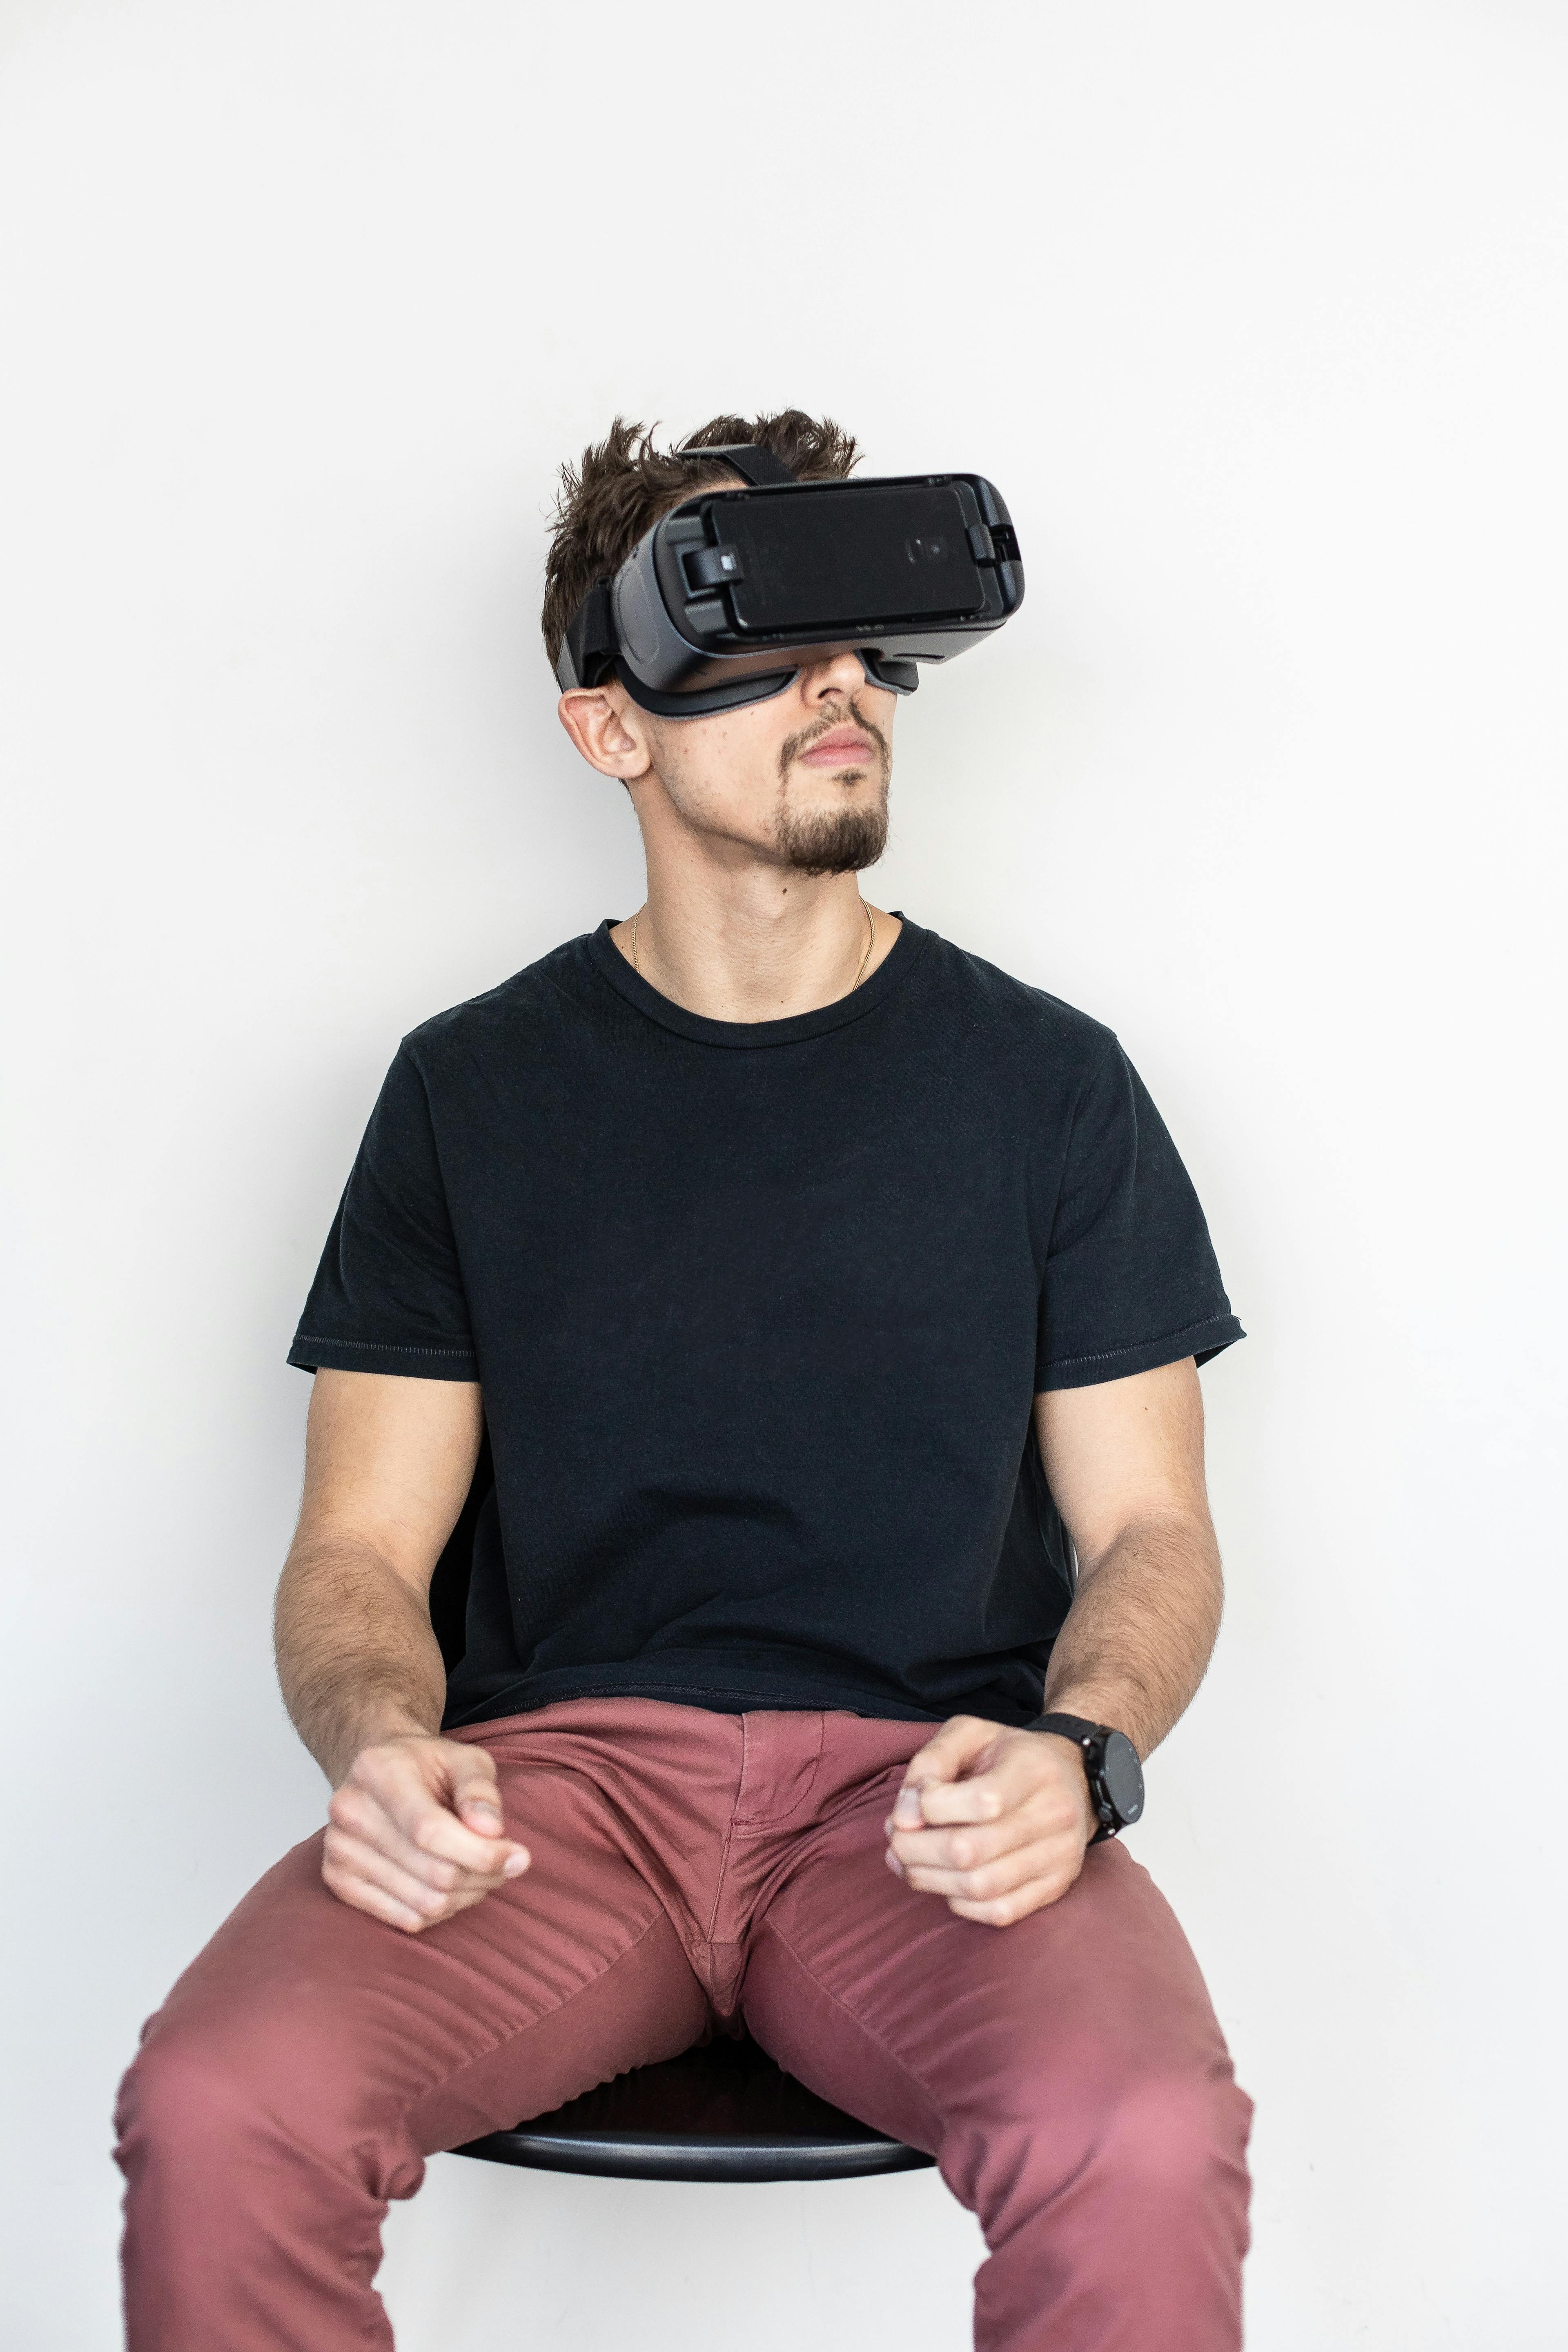 Eksplorasi Integrasi Teknologi Virtual Reality dalam Website E-Commerce